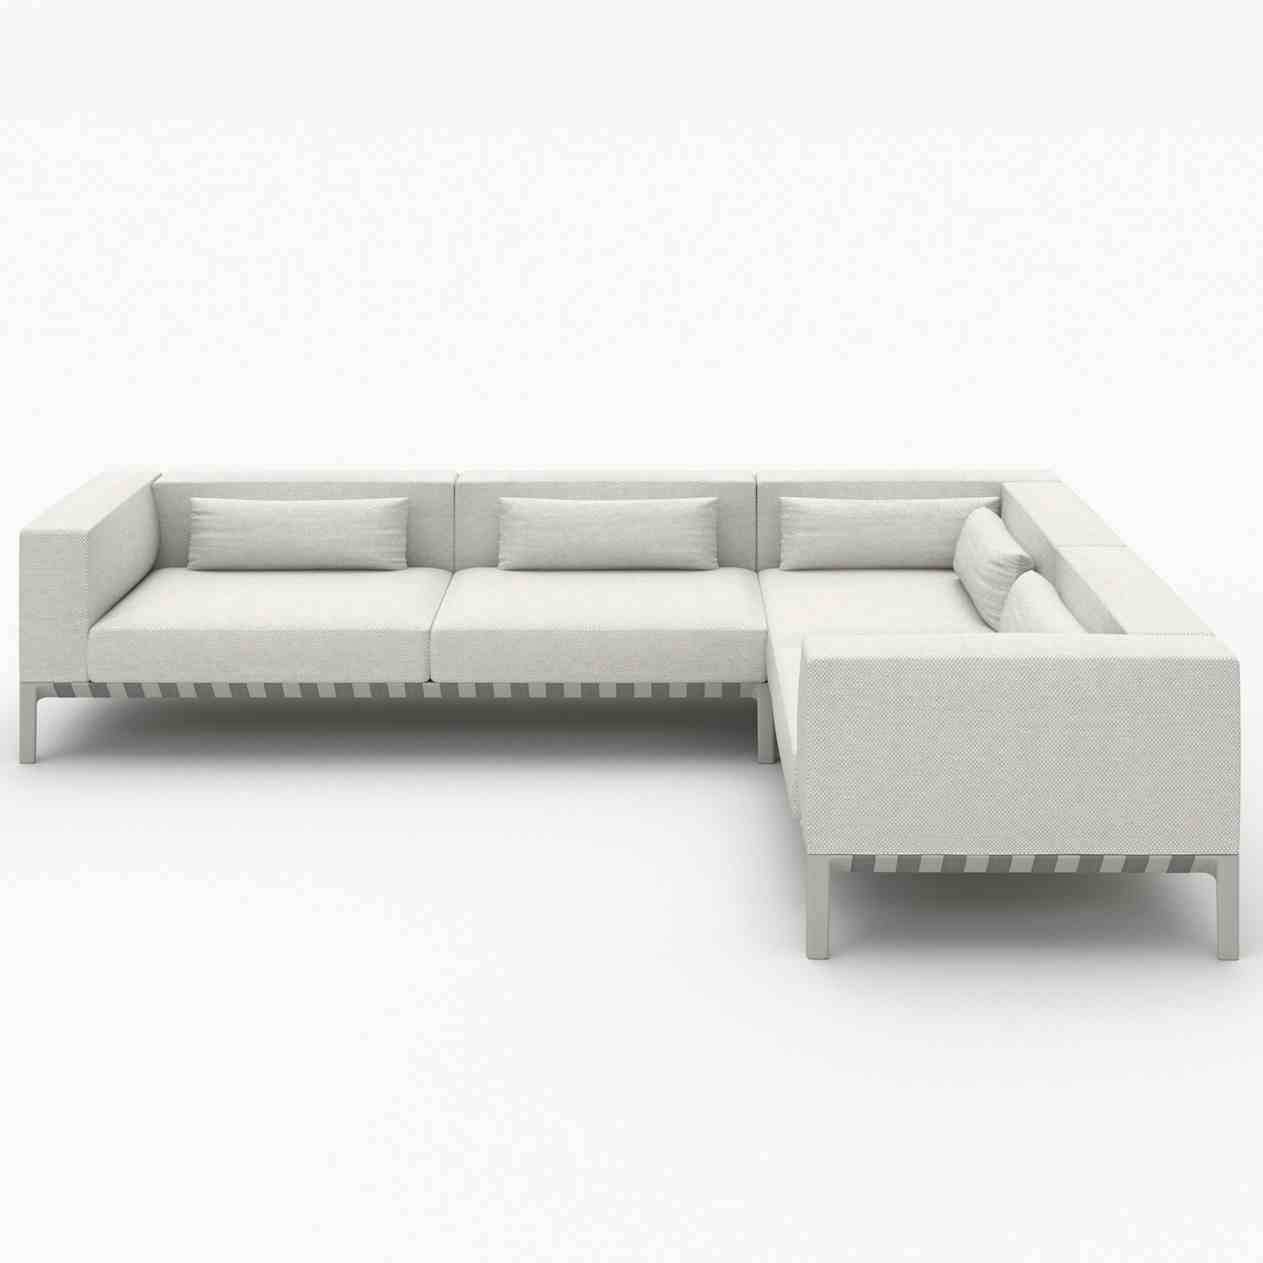 Bensen furniture outdoor able sofa thumbnail haute living